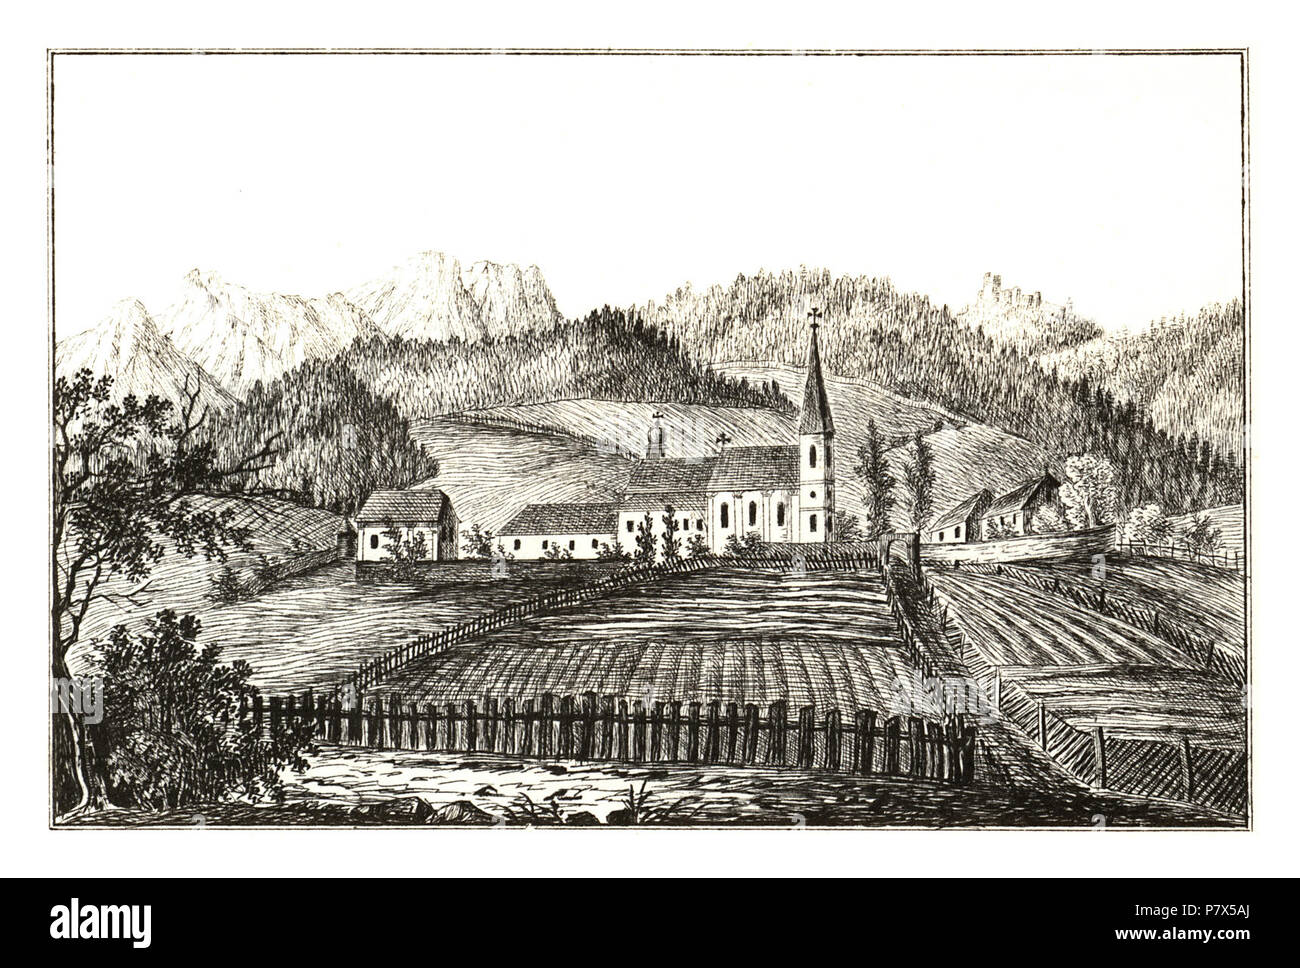 351 Mariahof, Mariahof - J.F.Kaiser Lithografirte Ansichten der Steiermark 1830. Stock Photo